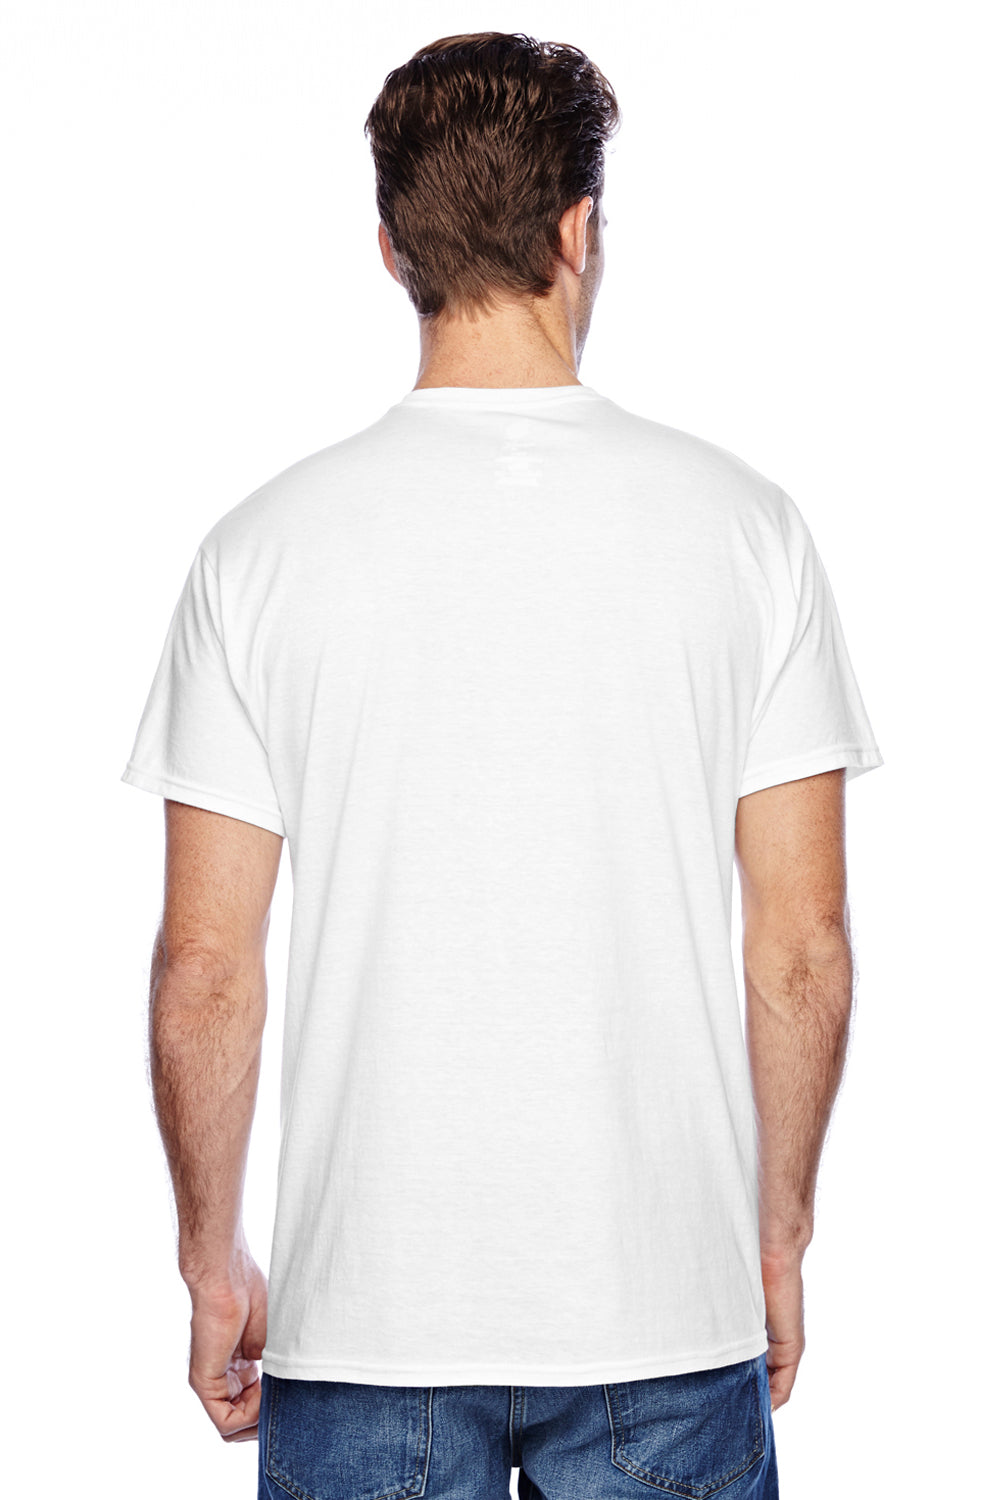 Hanes P4200 Mens X-Temp Moisture Wicking Short Sleeve Crewneck T-Shirt White Back